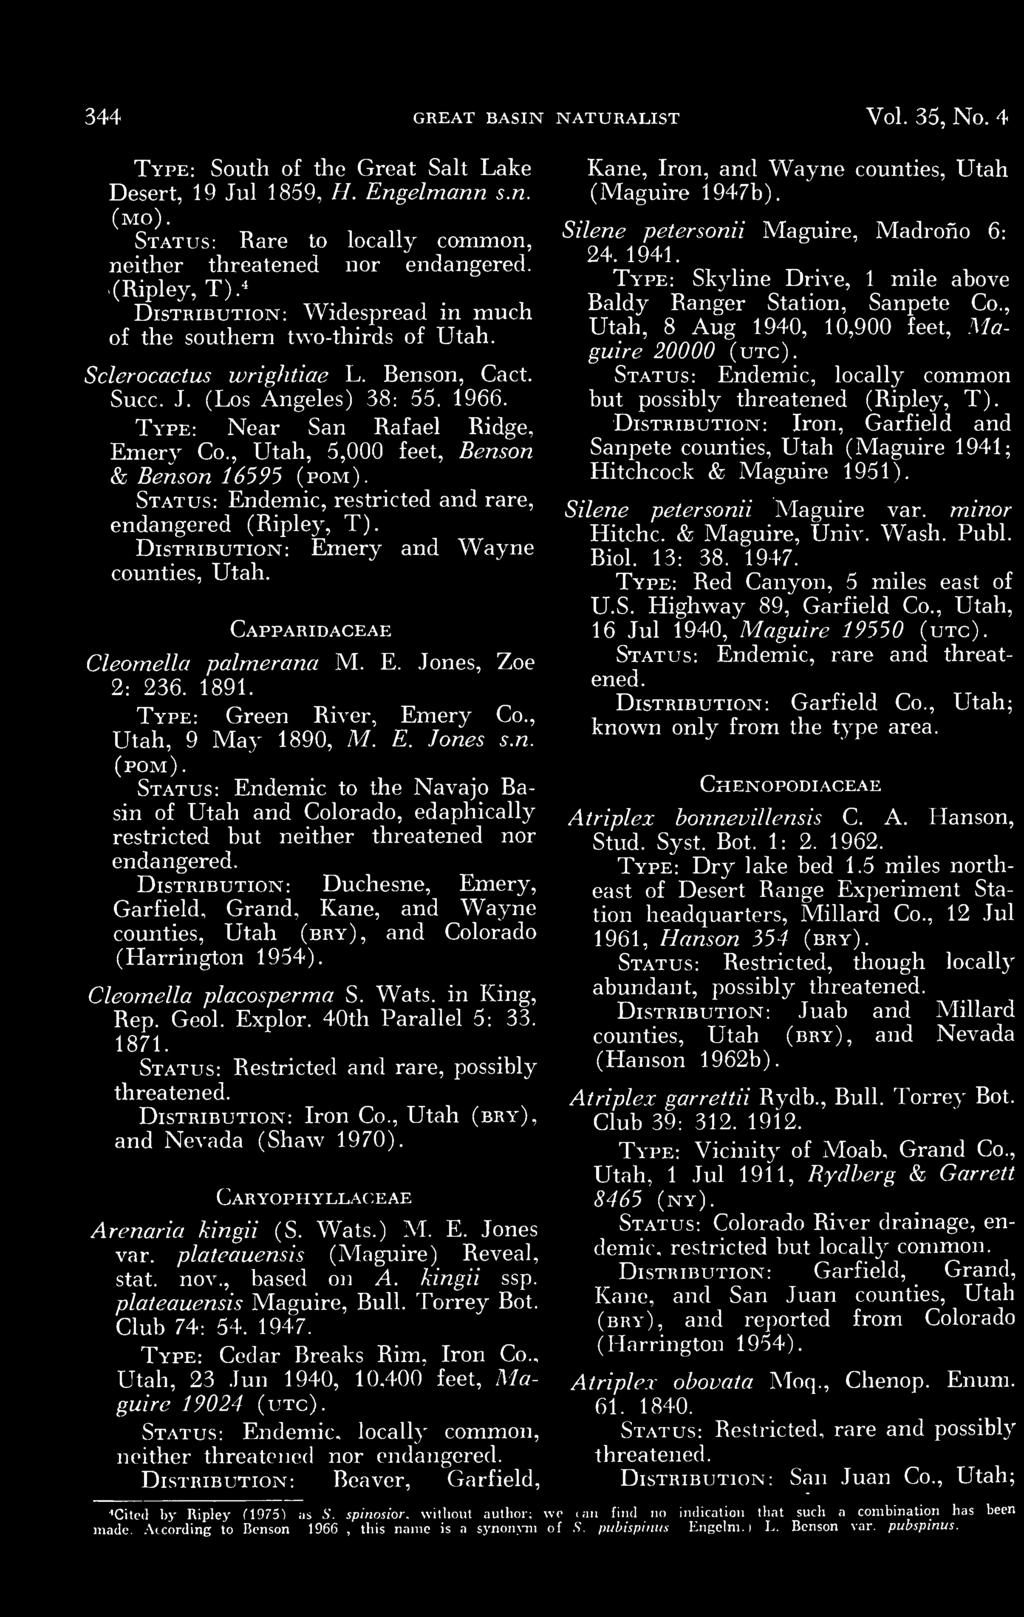 Benson & Benson 16595 (pom) Status: Endemic, restricted and rare, endangered (Ripley, T) Distribution: Emery and Wayne counties, Utah Capparidaceae Cleomella palmerana M E Jones, Zoe 2: 236 1891